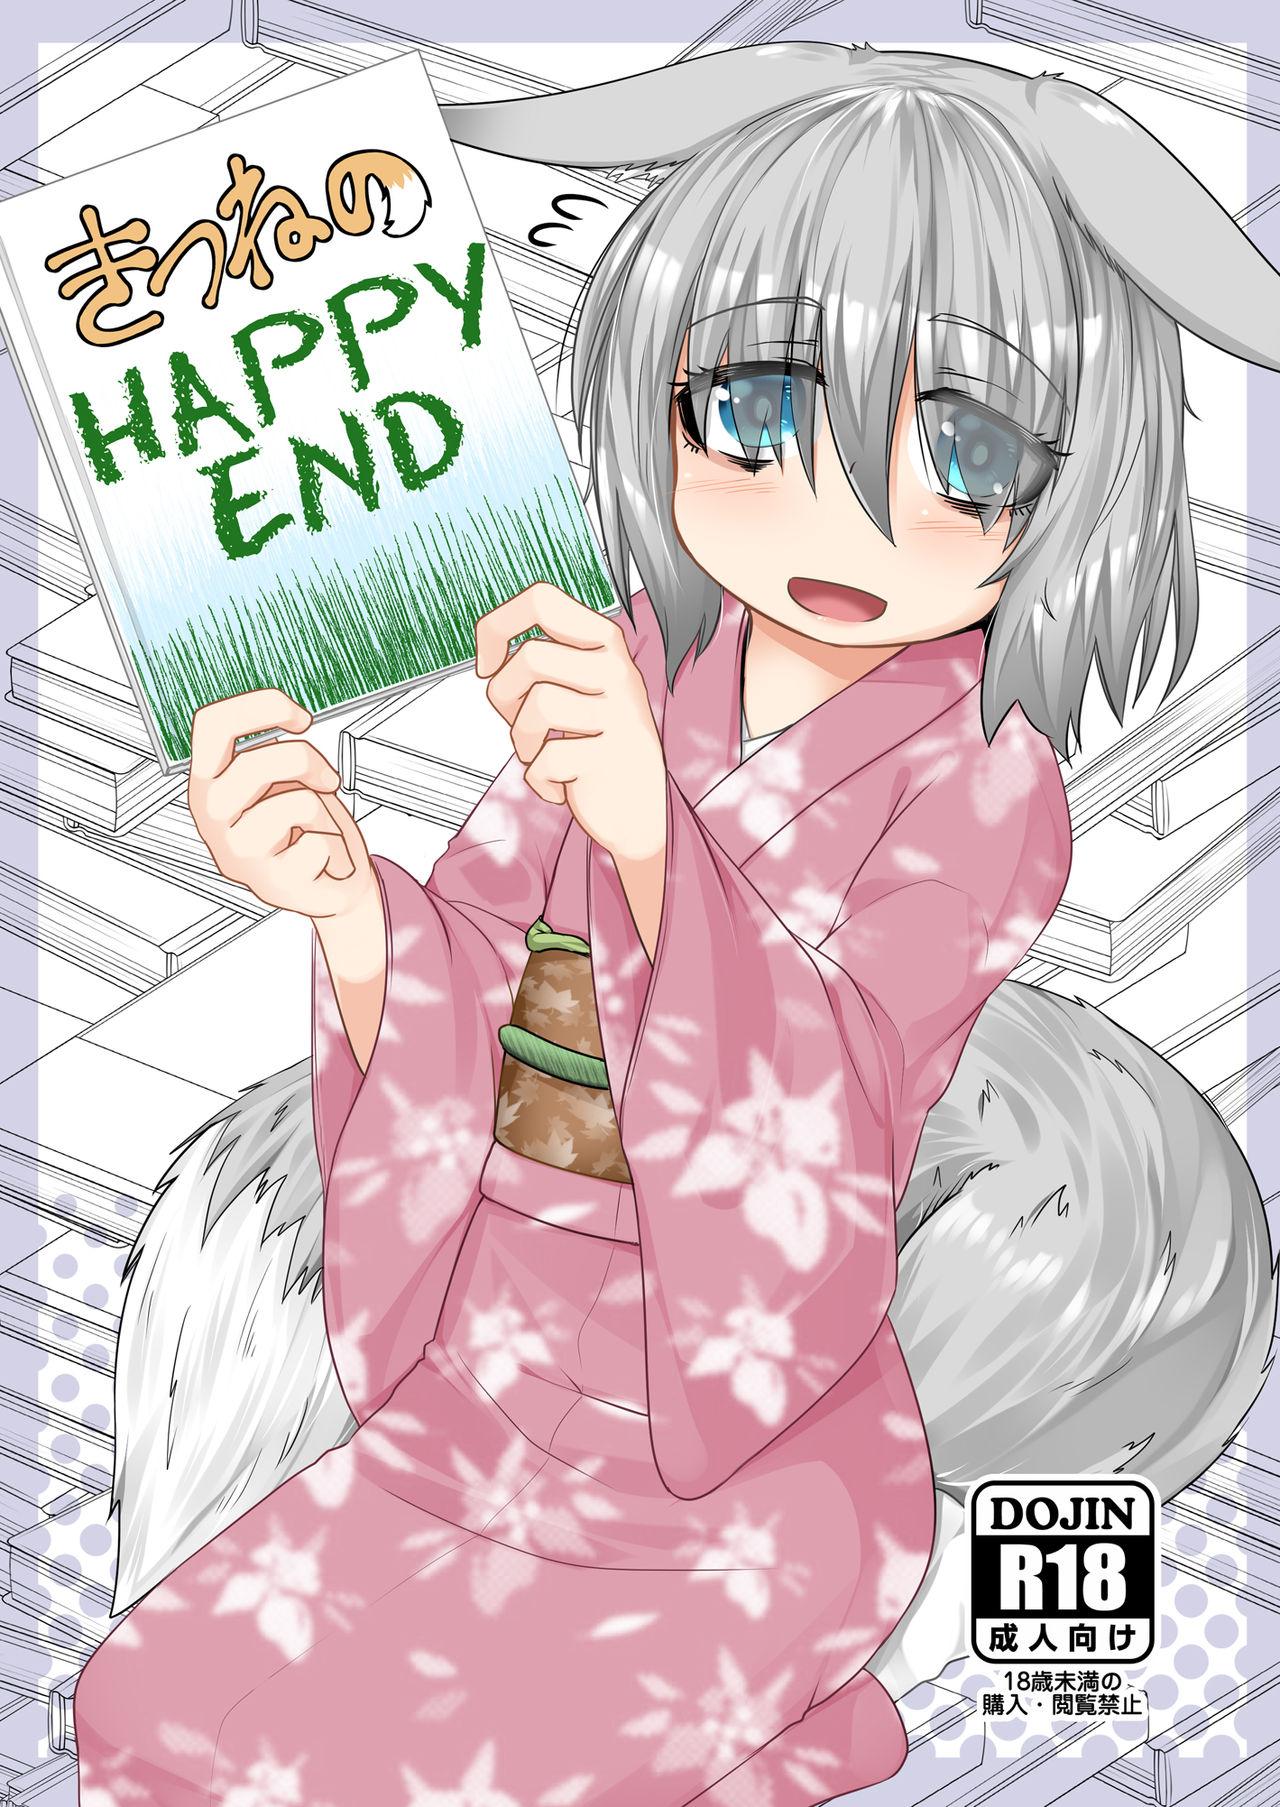 The Fox's Happy End 0